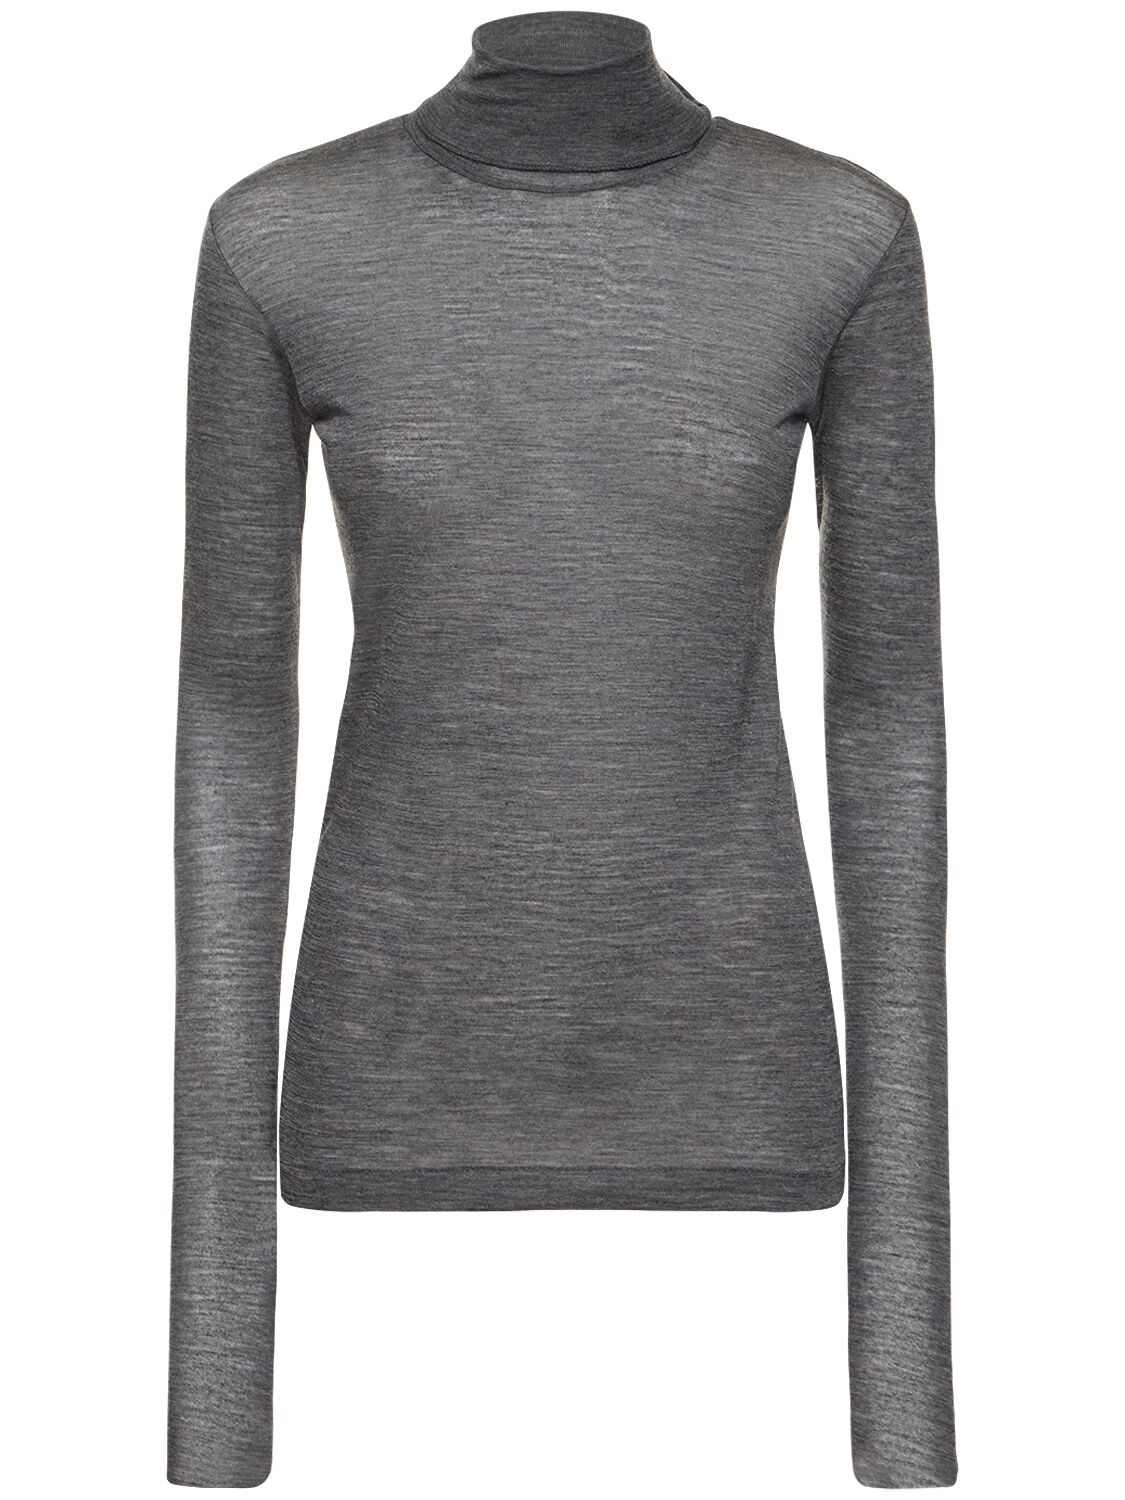 Auralee Super Soft Sheer Wool Jersey Top In Grey